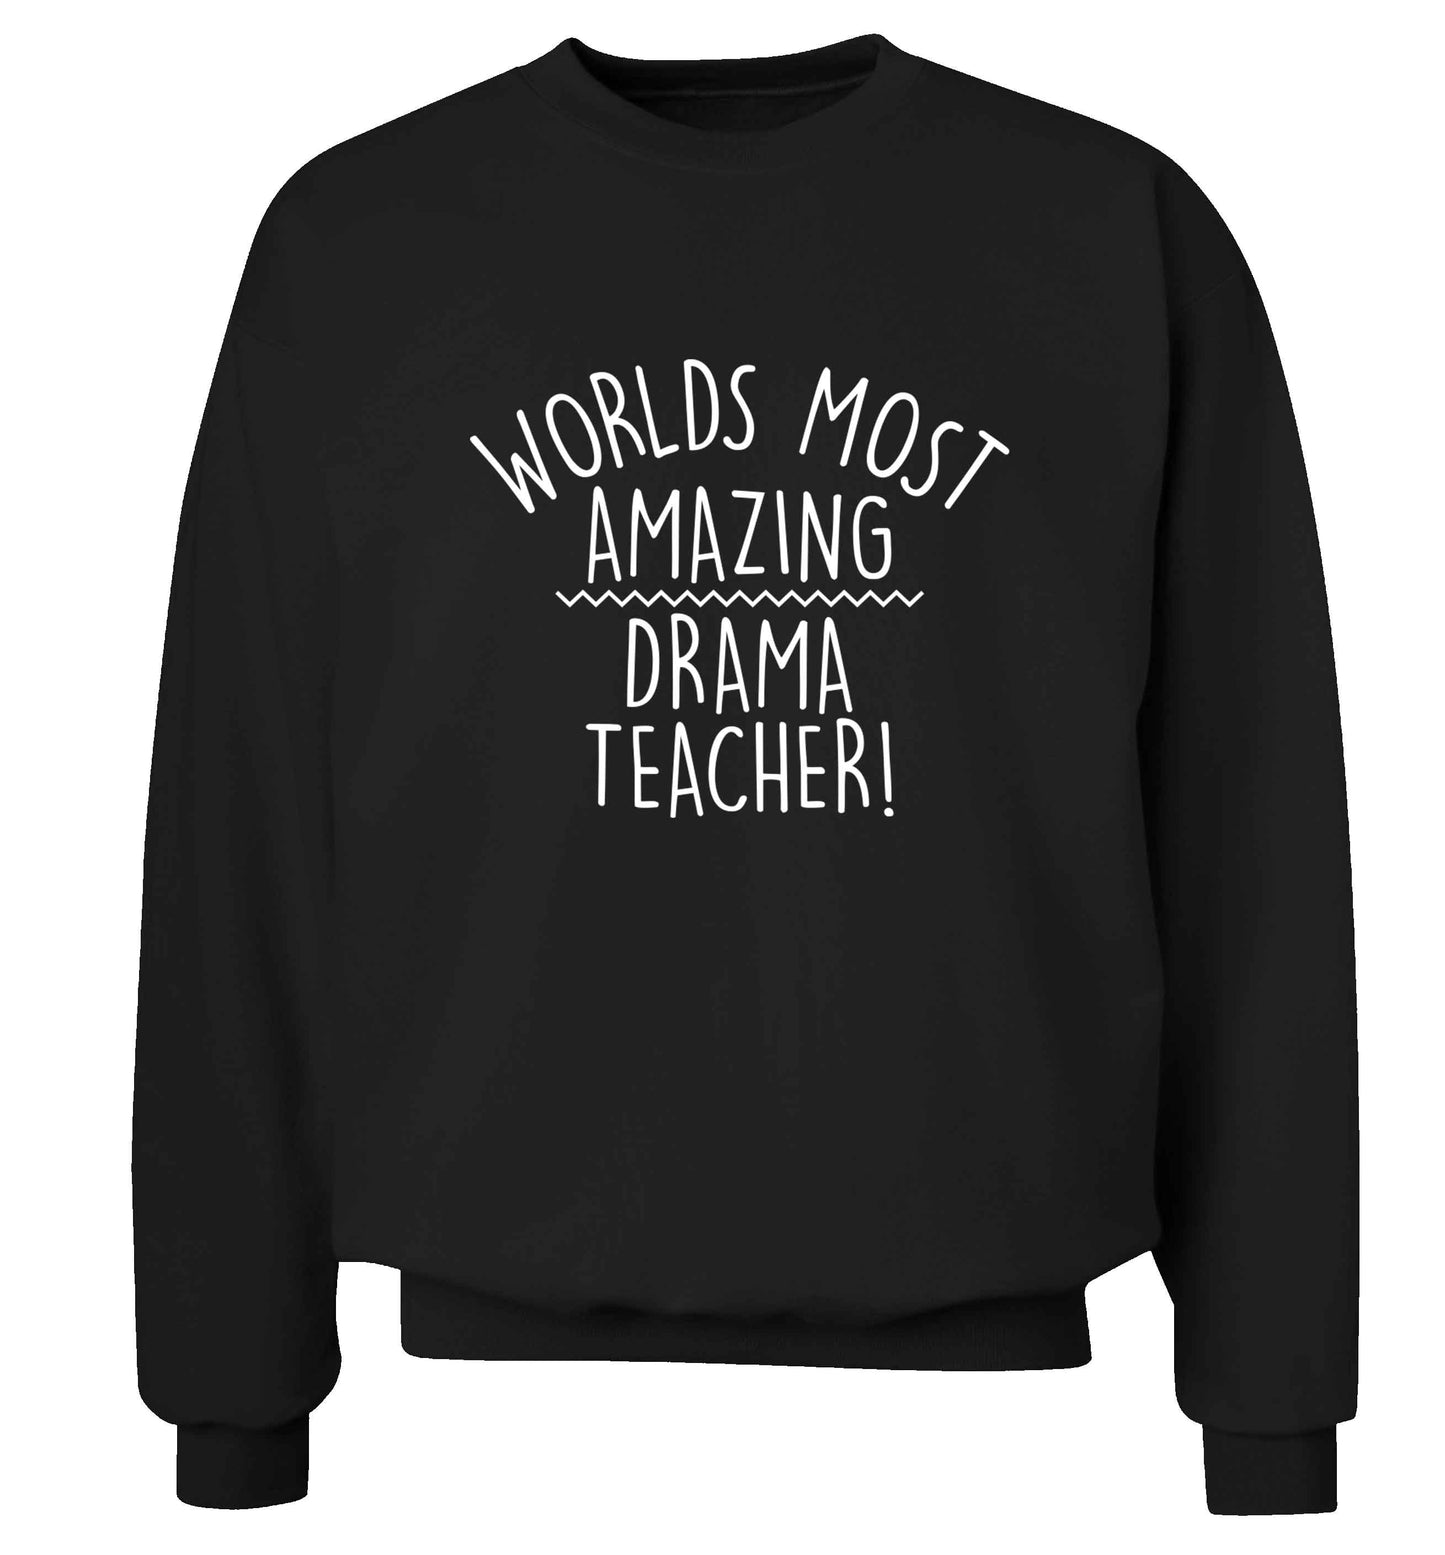 Worlds most amazing drama teacher adult's unisex black sweater 2XL